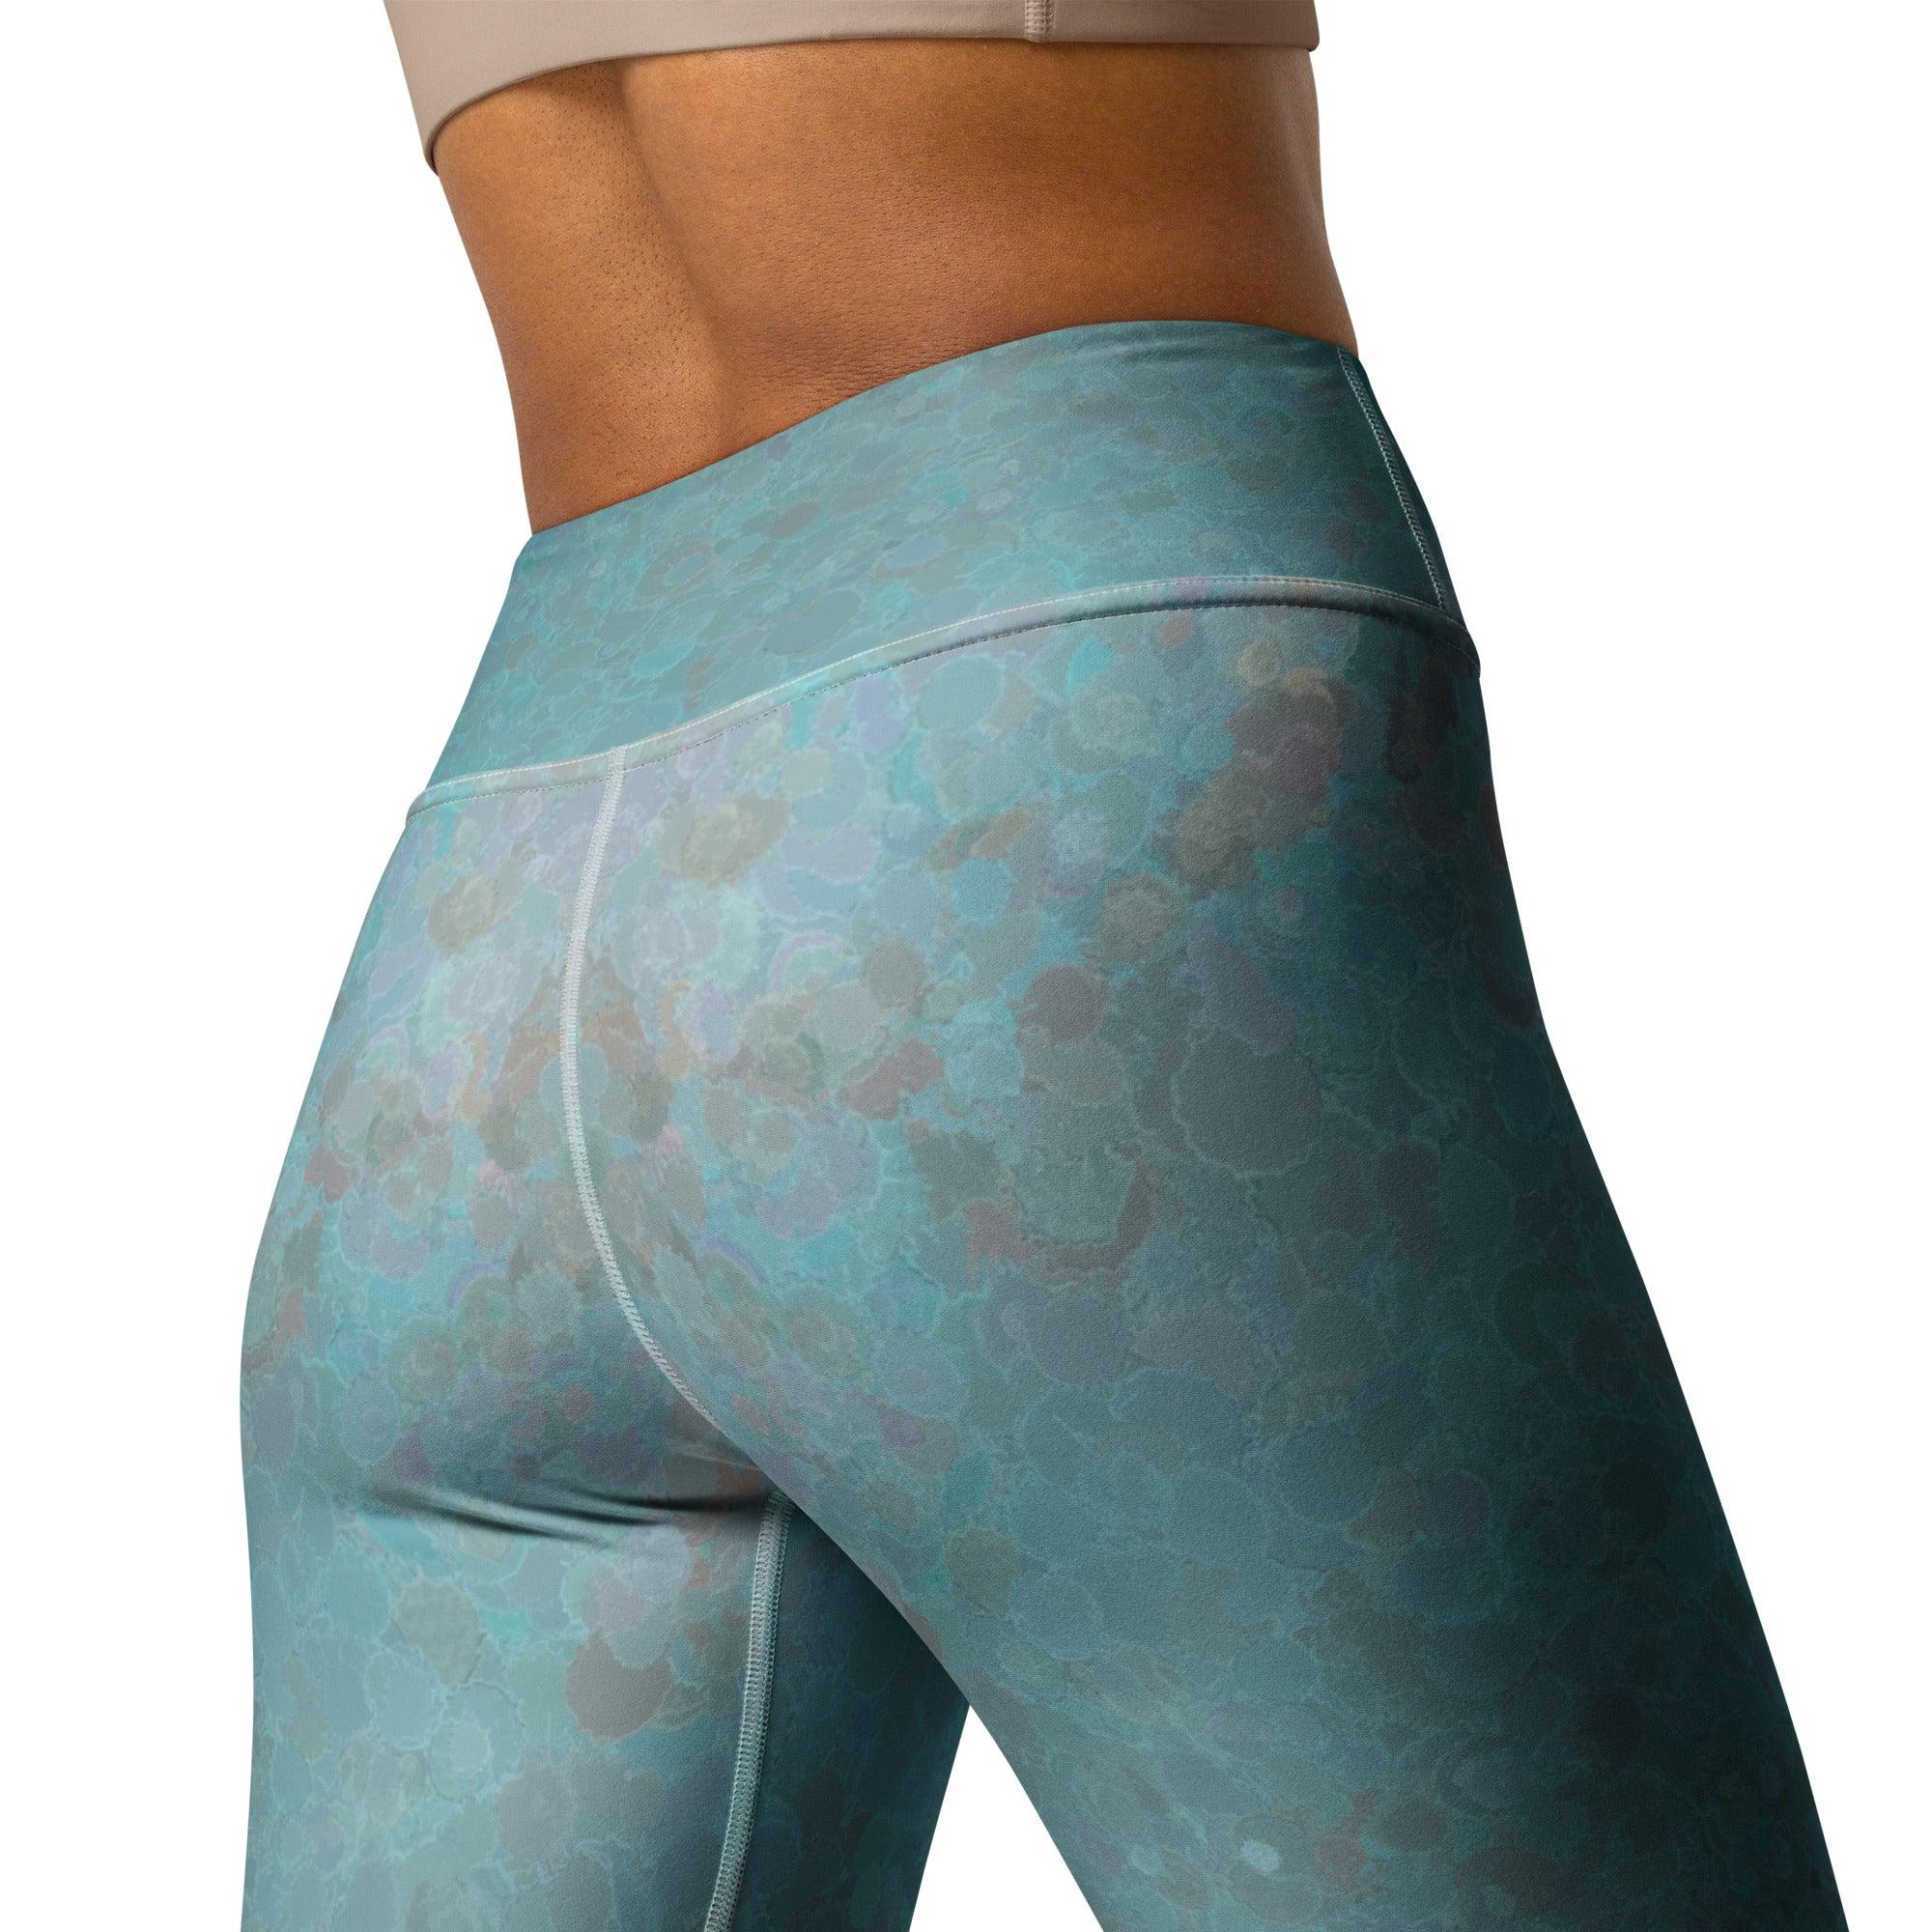 Close-up of Glitter 24 Yoga Leggings fabric showing glitter detail.